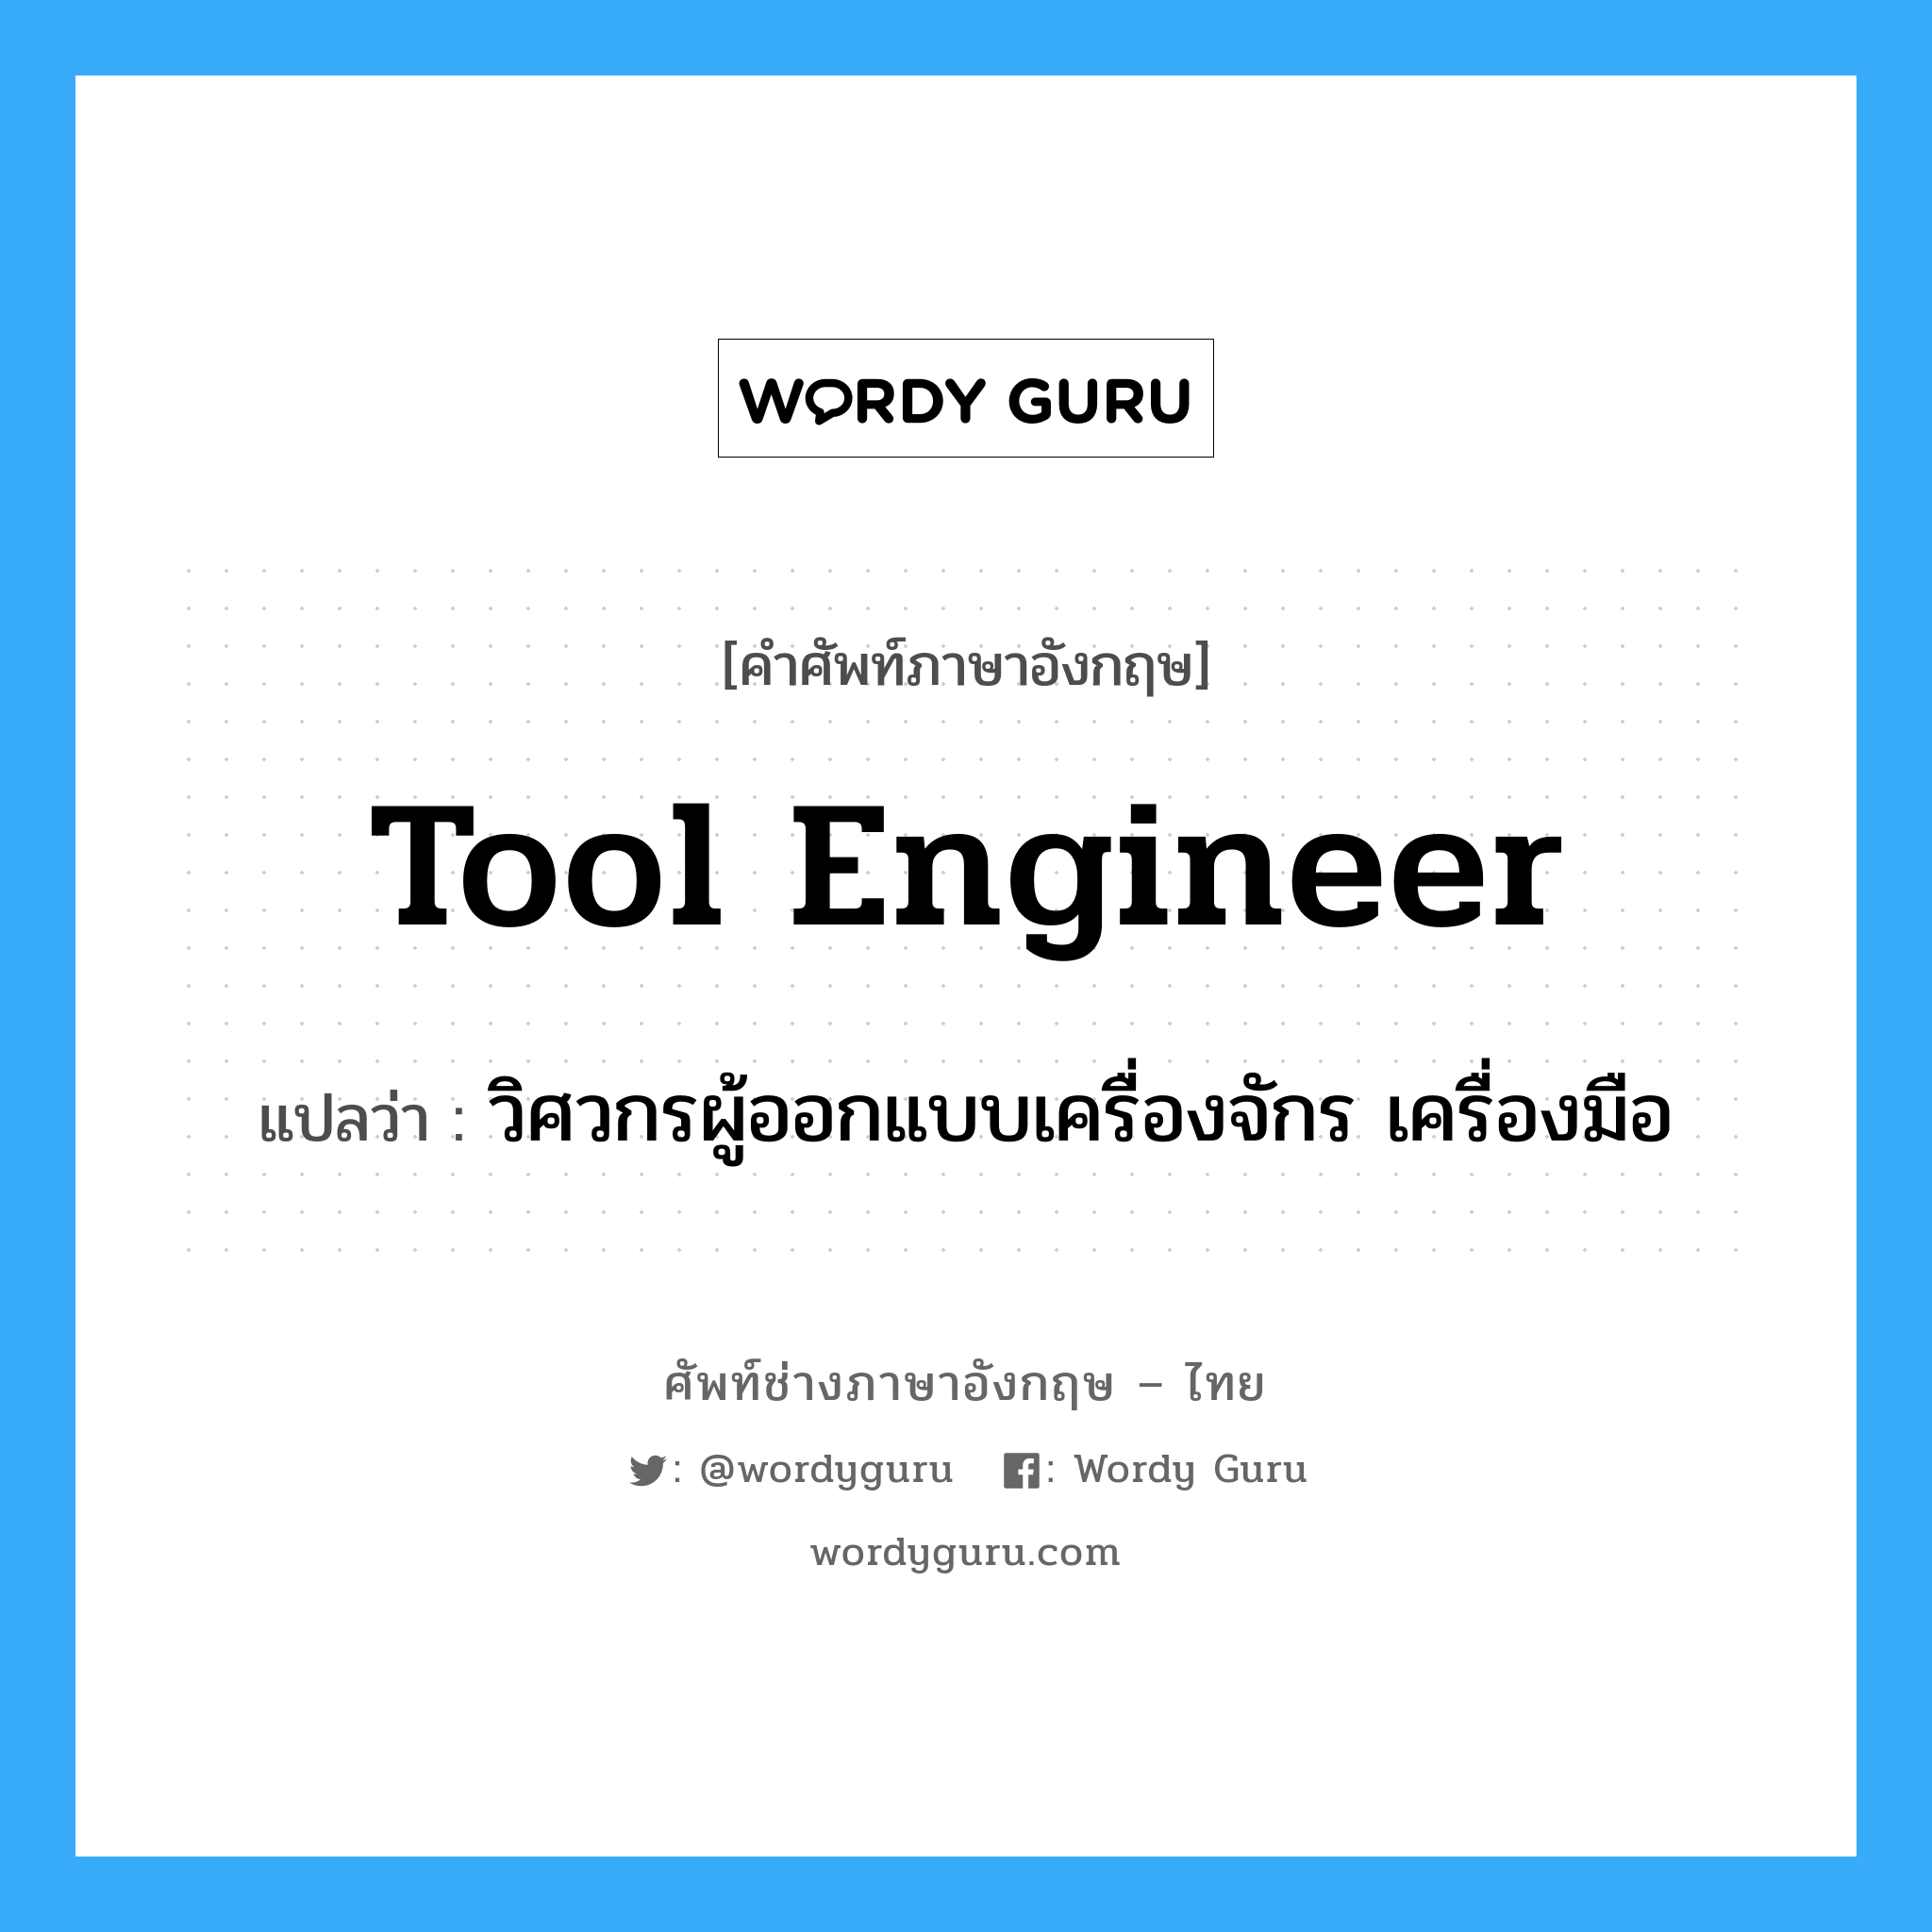 tool engineer แปลว่า?, คำศัพท์ช่างภาษาอังกฤษ - ไทย tool engineer คำศัพท์ภาษาอังกฤษ tool engineer แปลว่า วิศวกรผู้ออกแบบเครื่องจักร เครื่องมือ